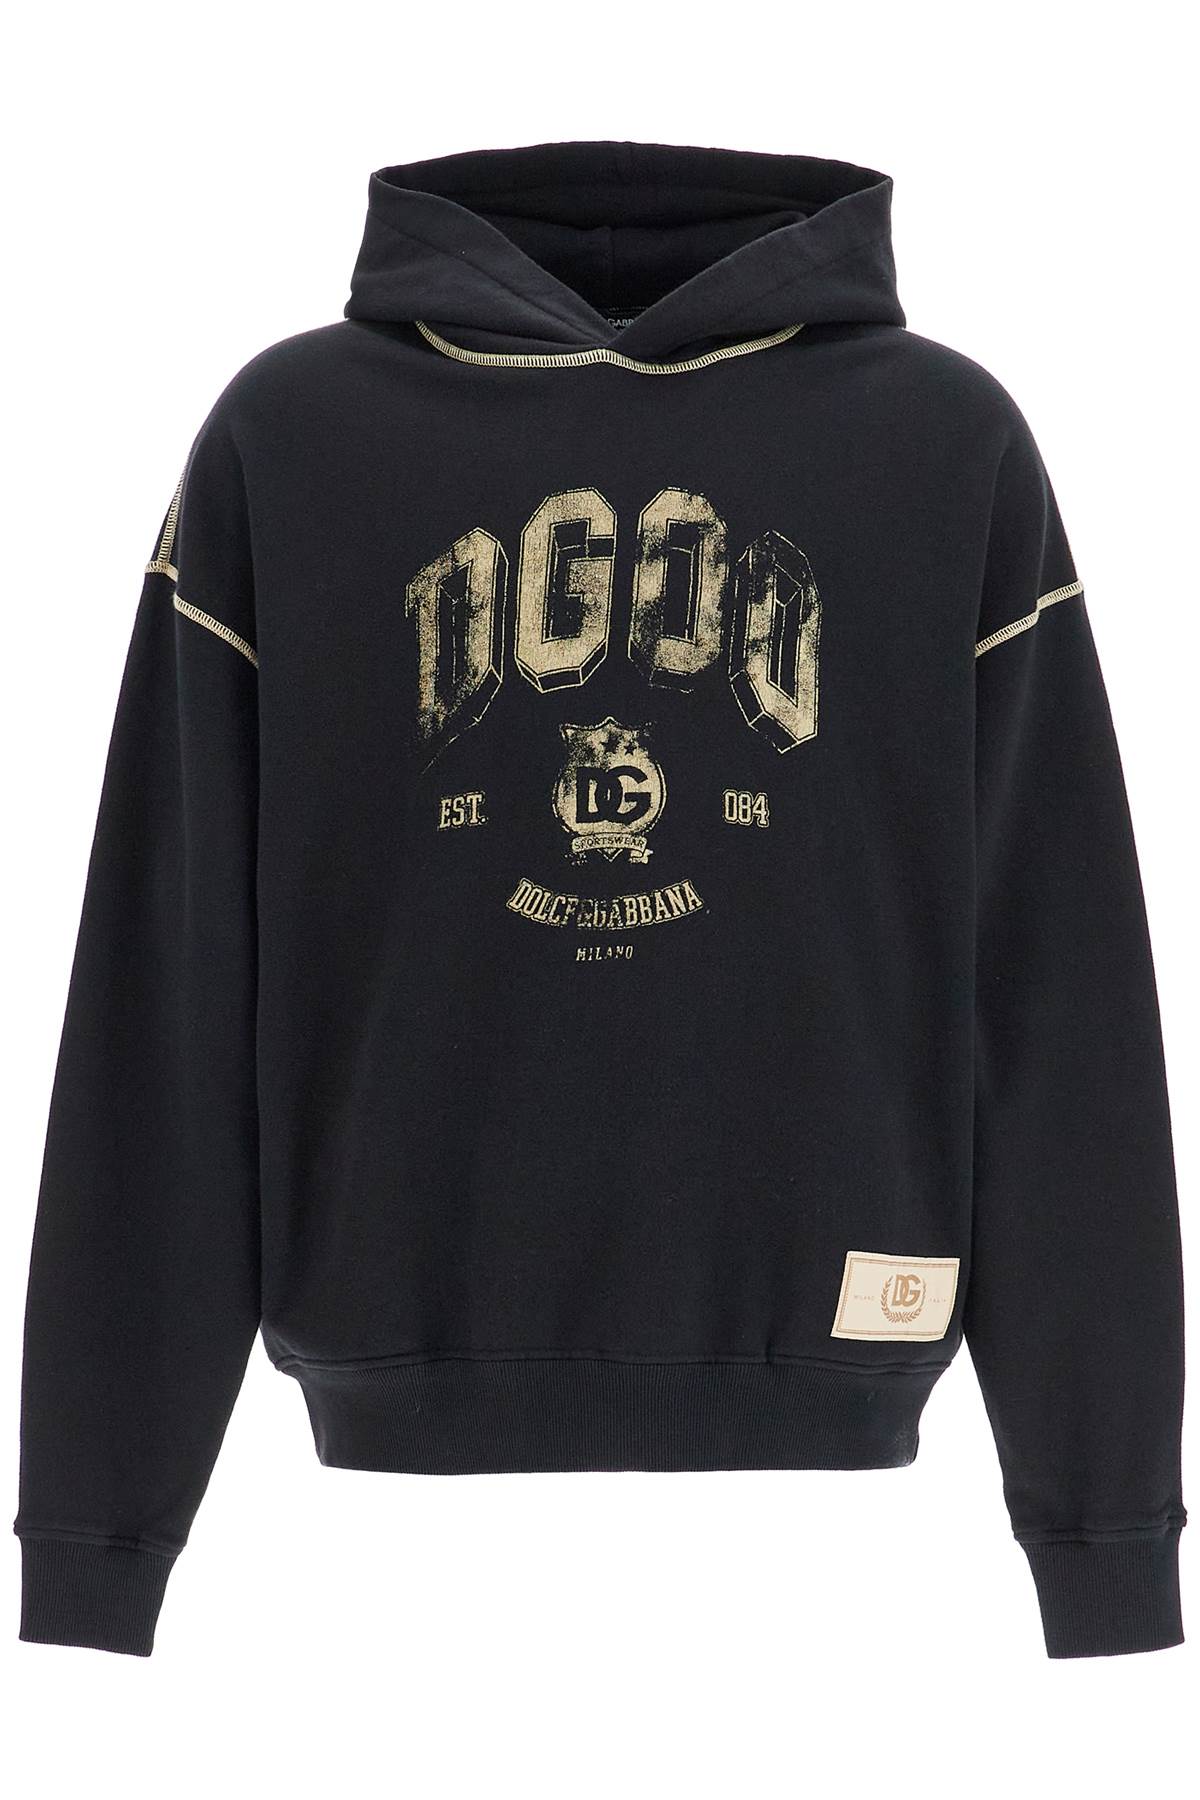 Dolce & Gabbana DOLCE & GABBANA oversized hoodie with hood and logo print